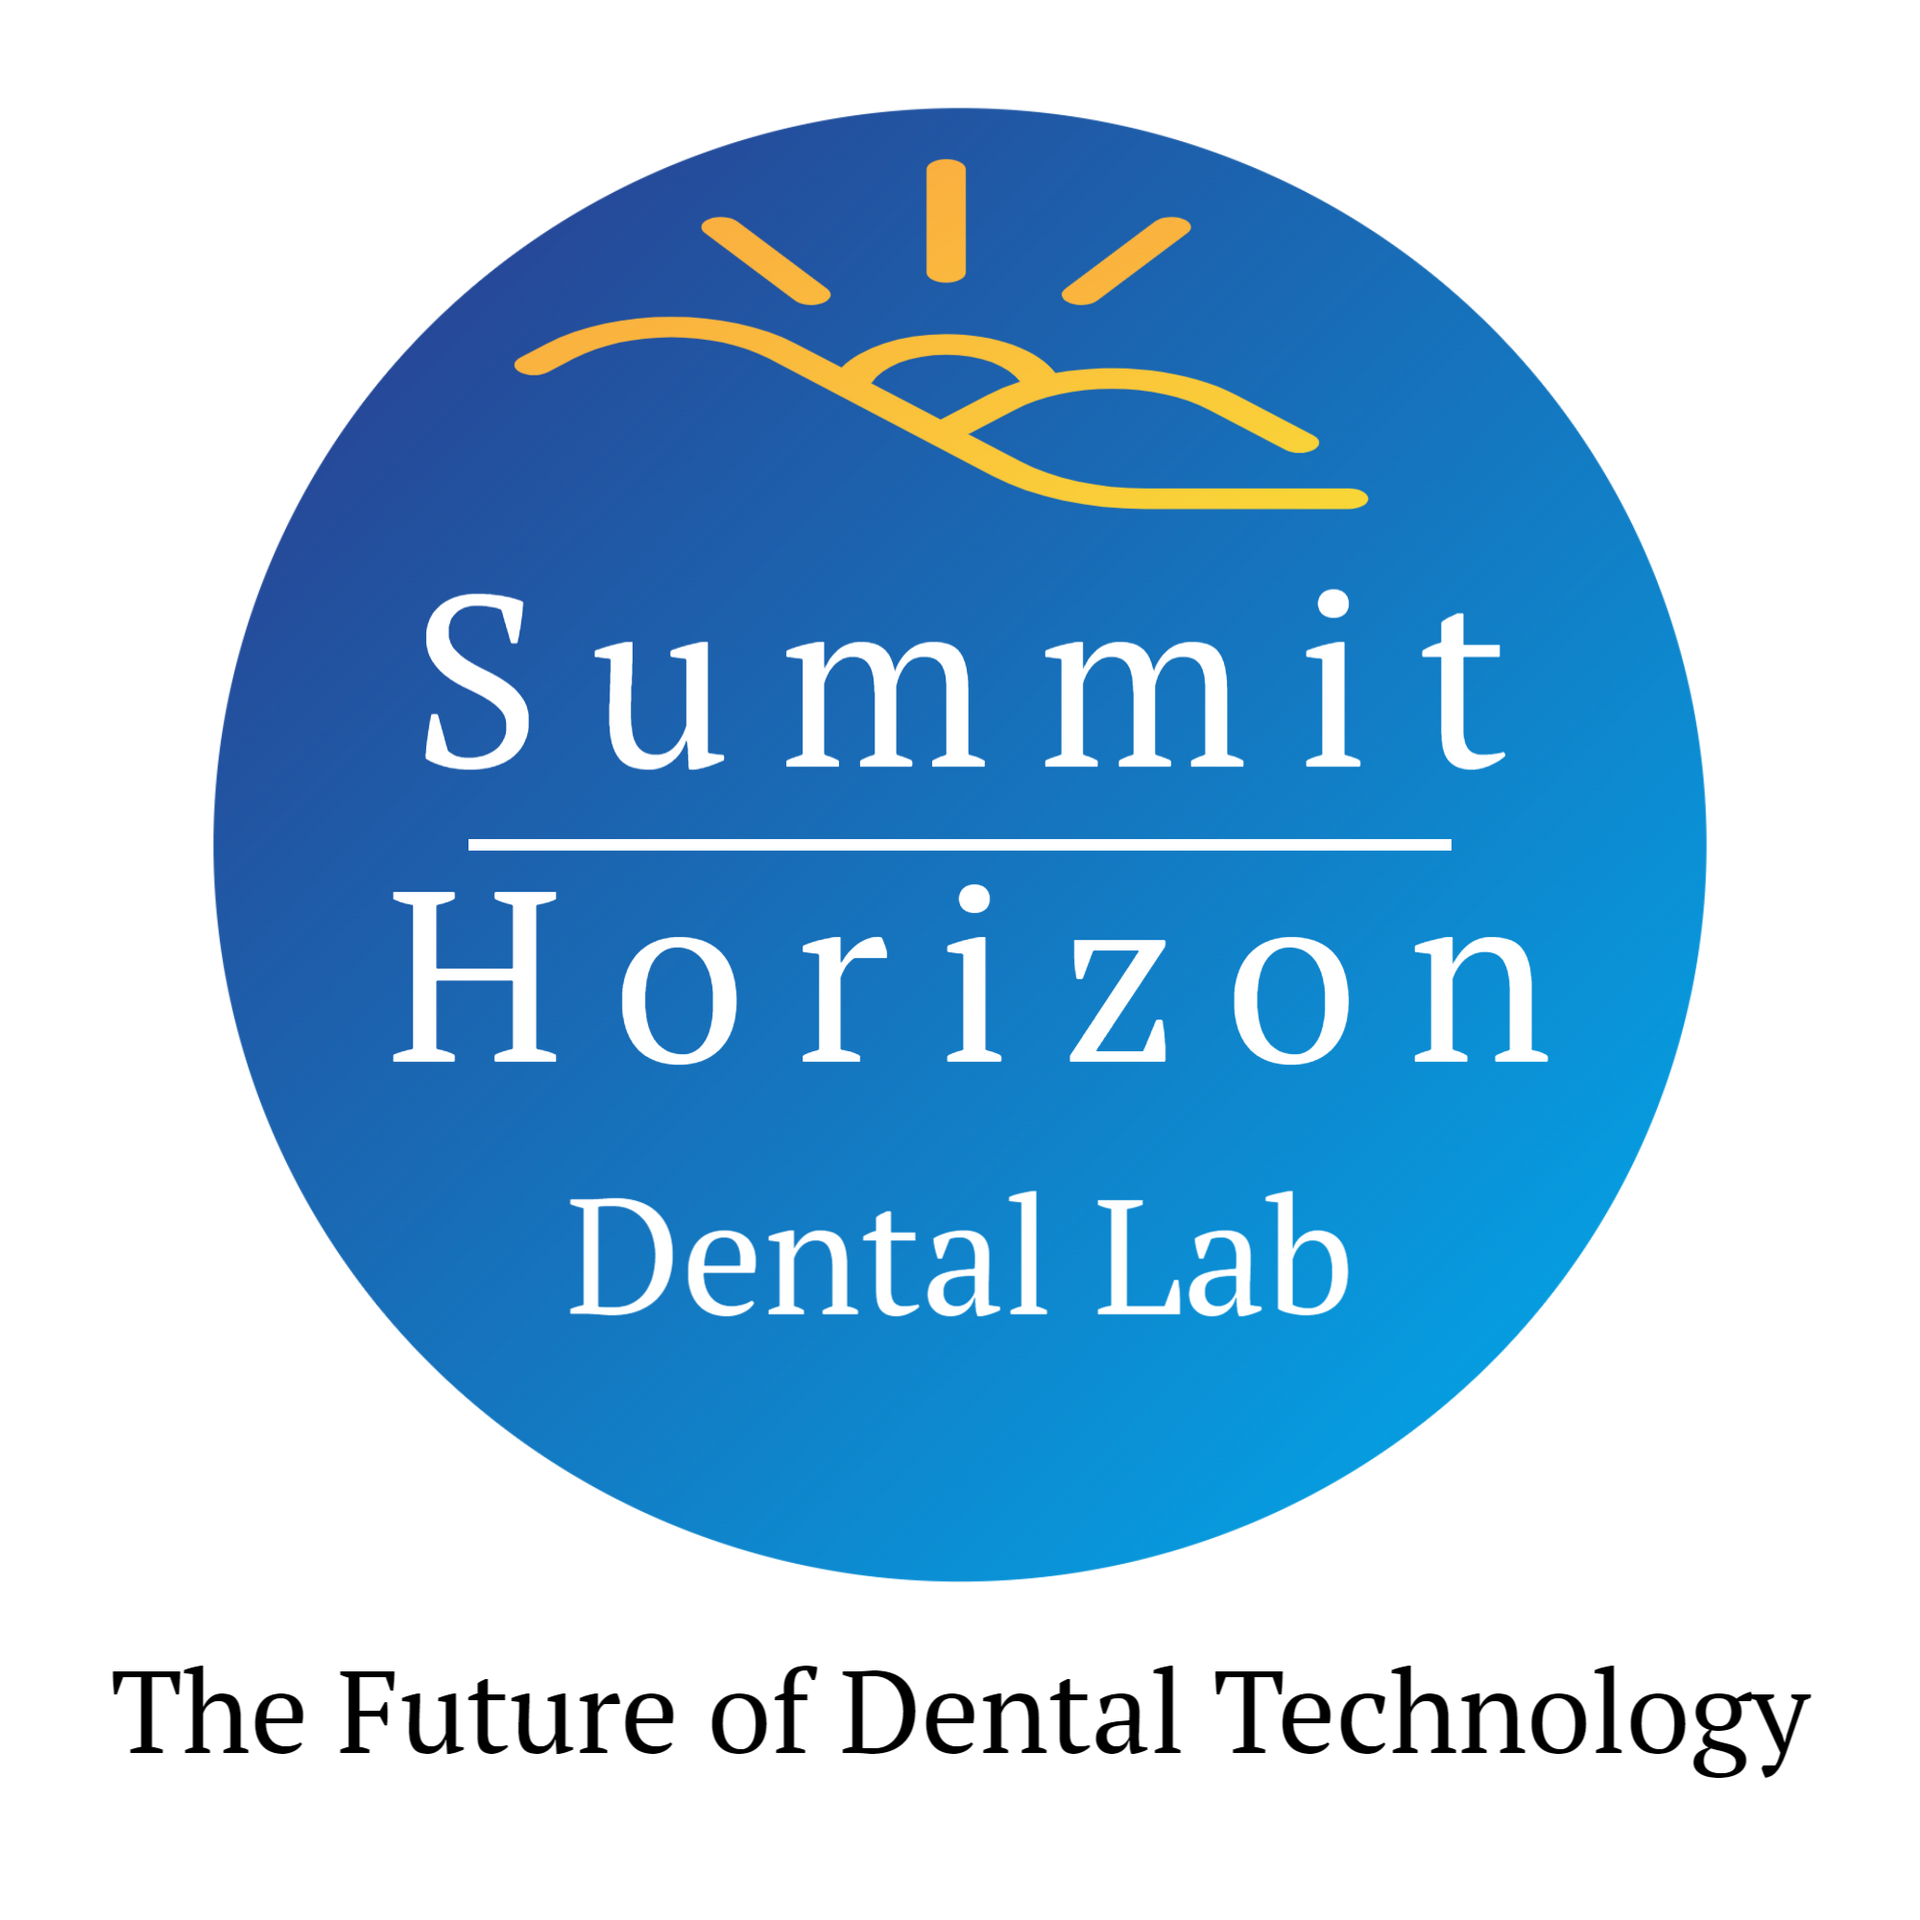 Summit Horizon Dental Lab - The Future of Dental Technology